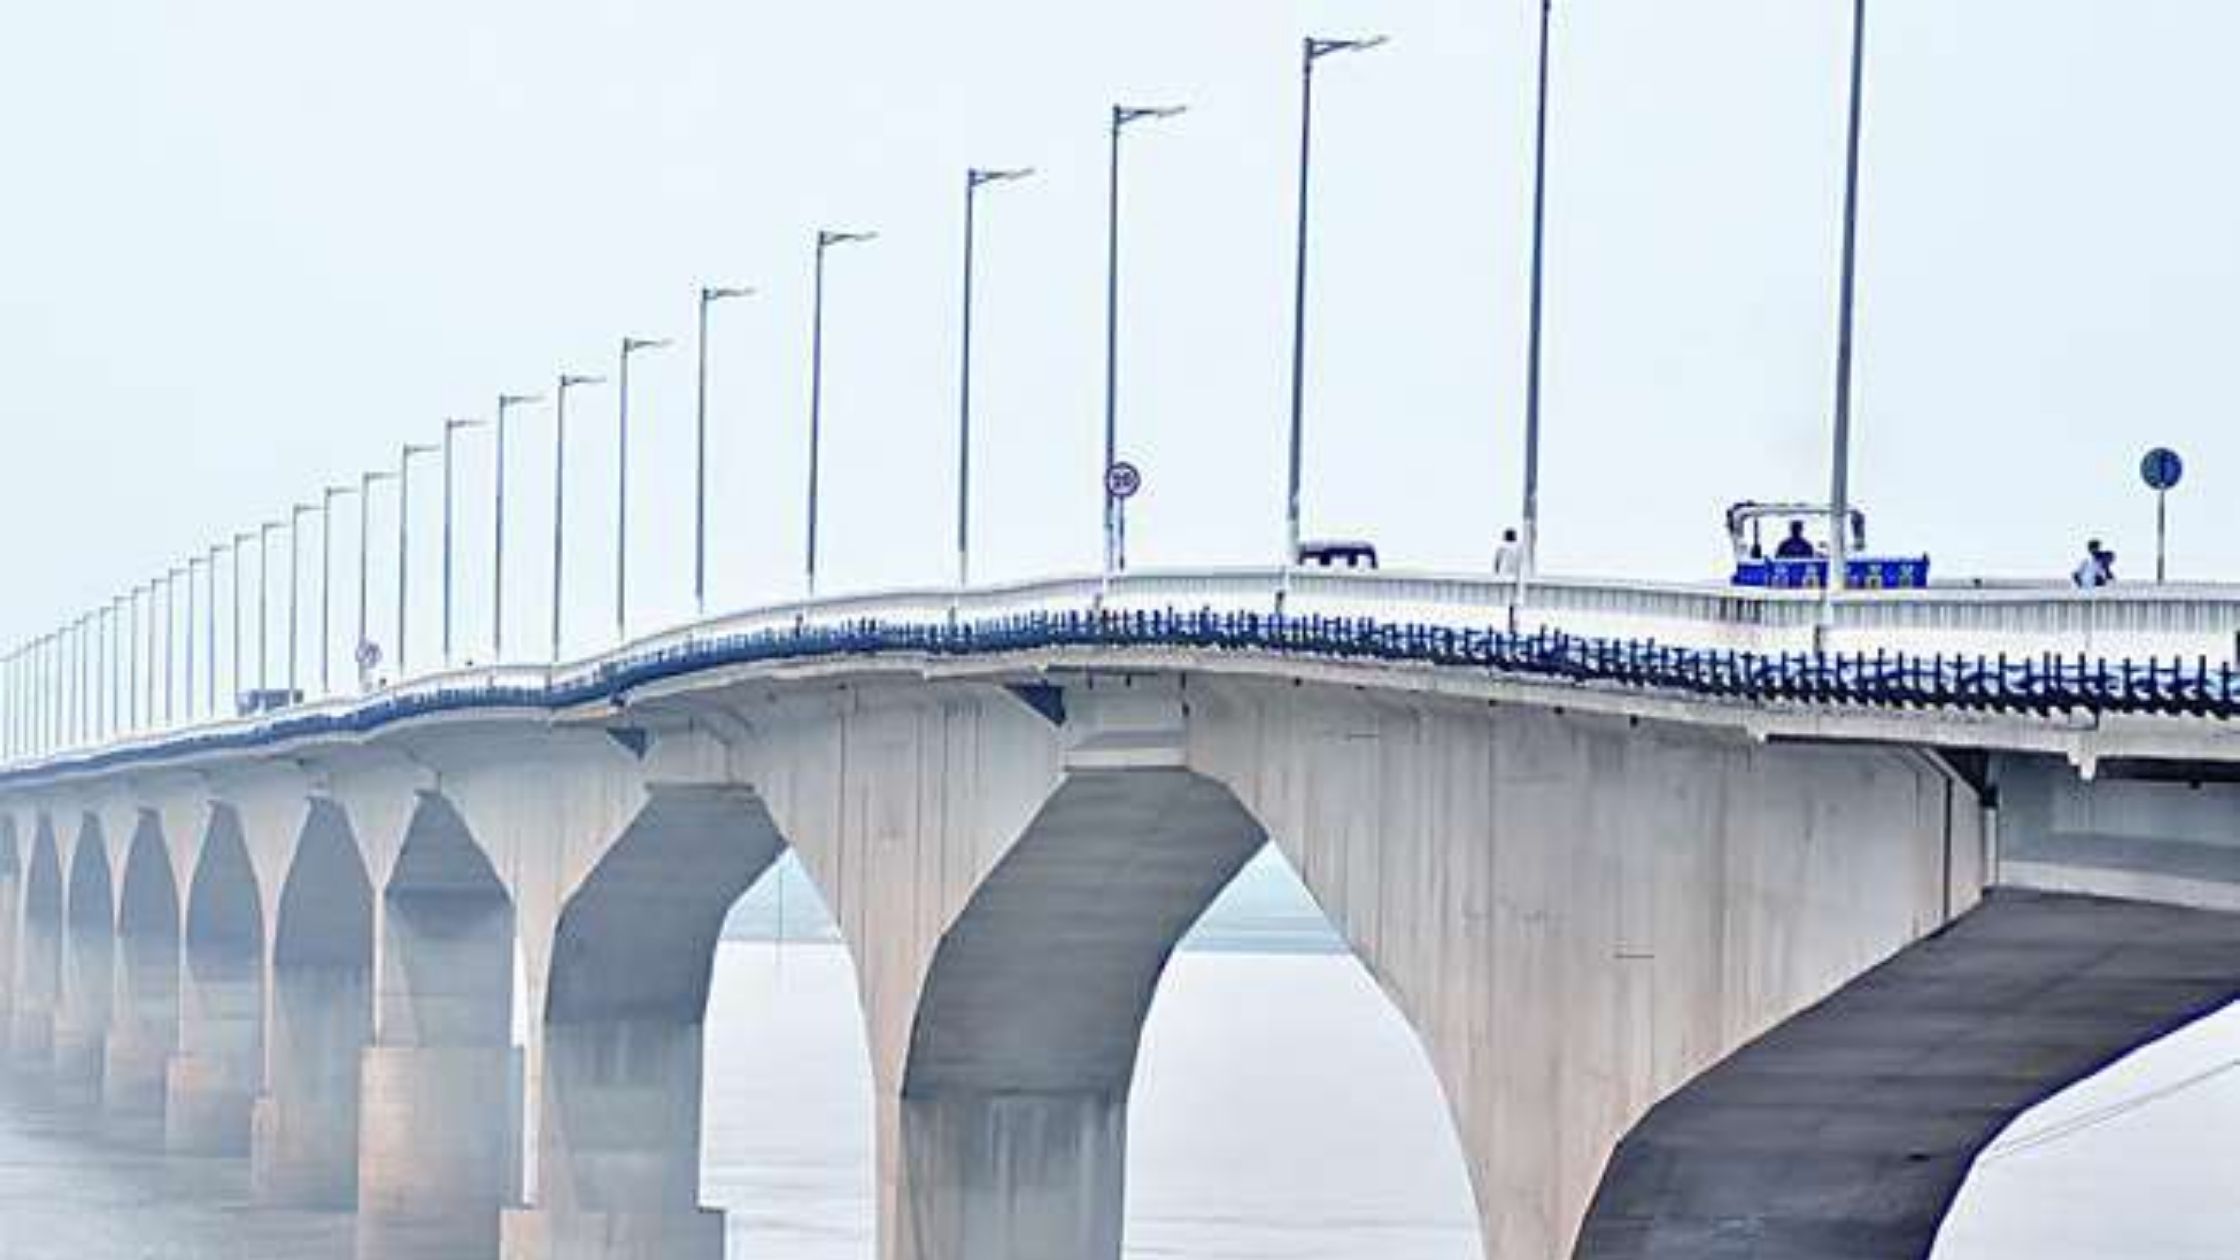 NH-106 work started 7 km long bridge to be built on Kosi river